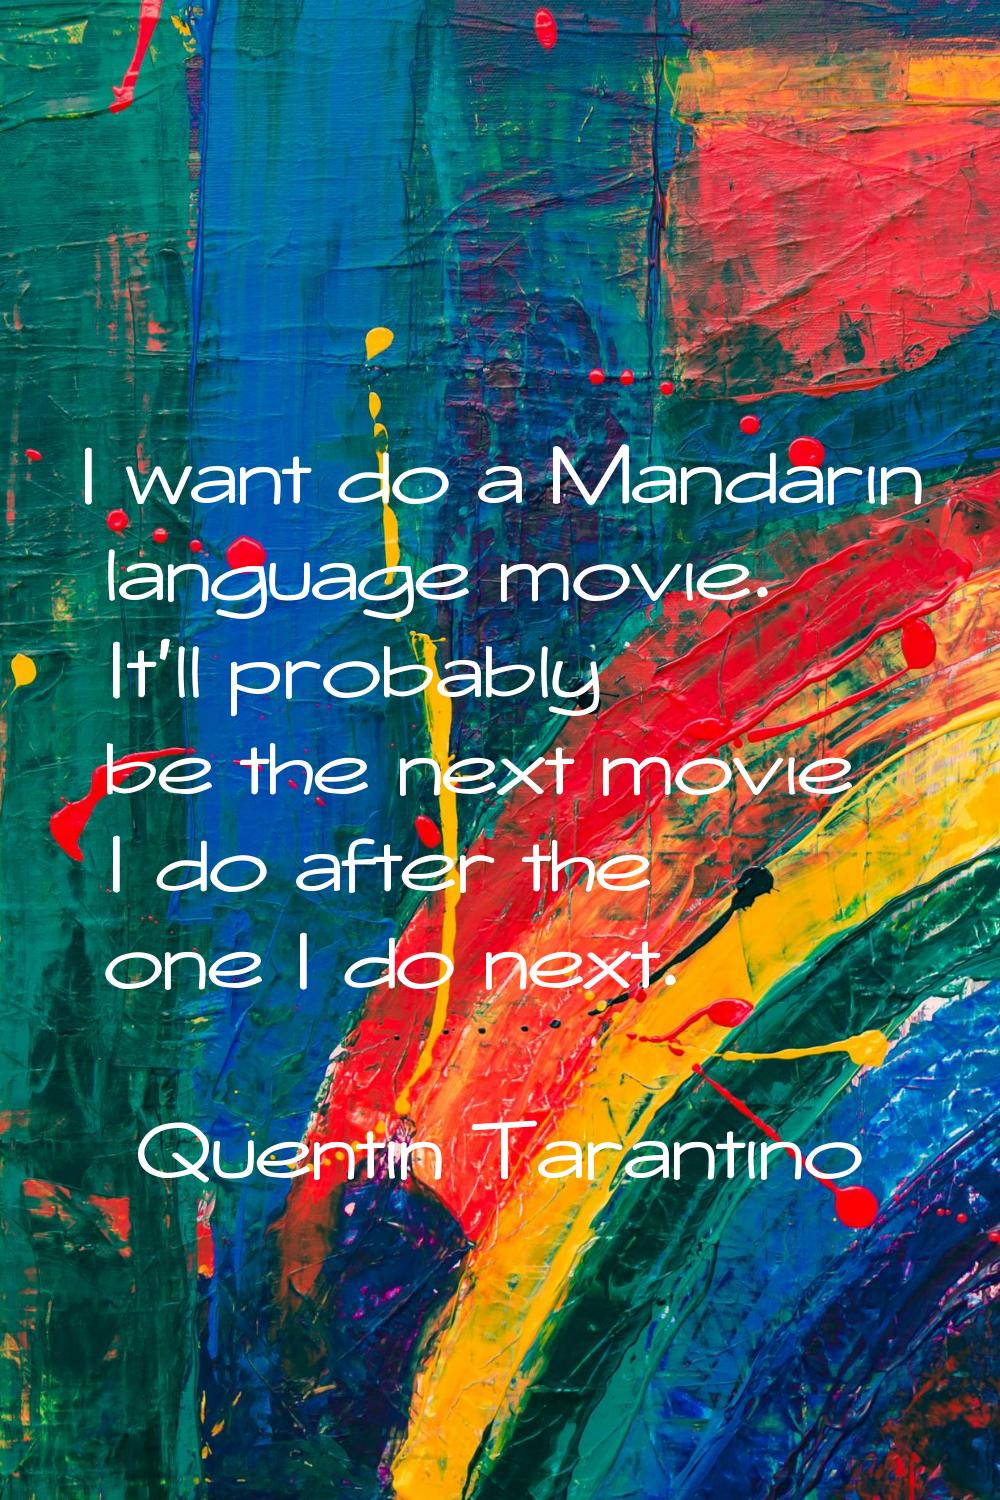 I want do a Mandarin language movie. It'll probably be the next movie I do after the one I do next.